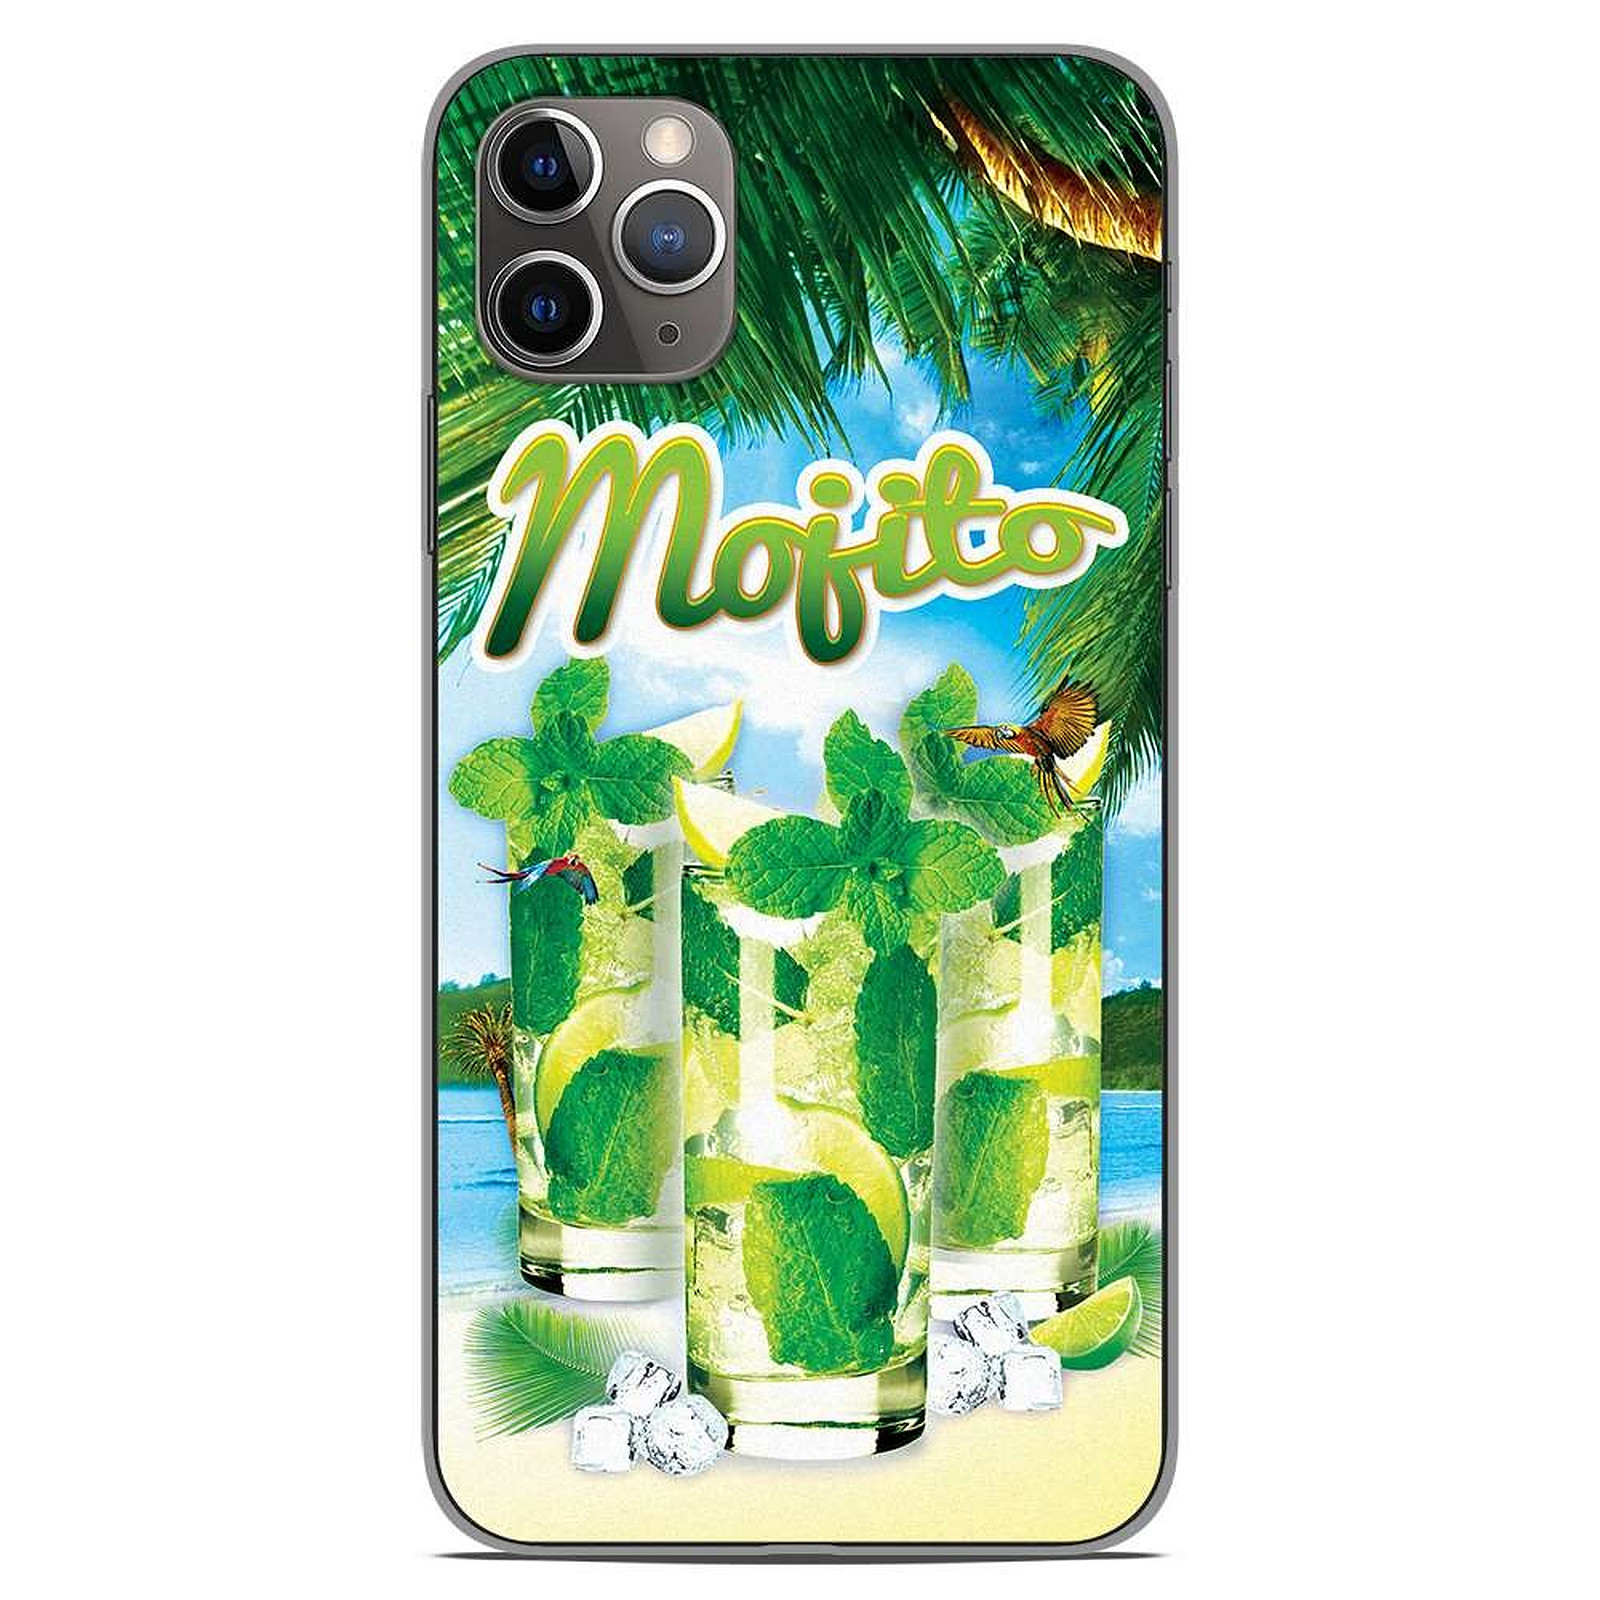 1001 Coques Coque silicone gel Apple iPhone 11 Pro Max motif Mojito Plage - Coque telephone 1001Coques